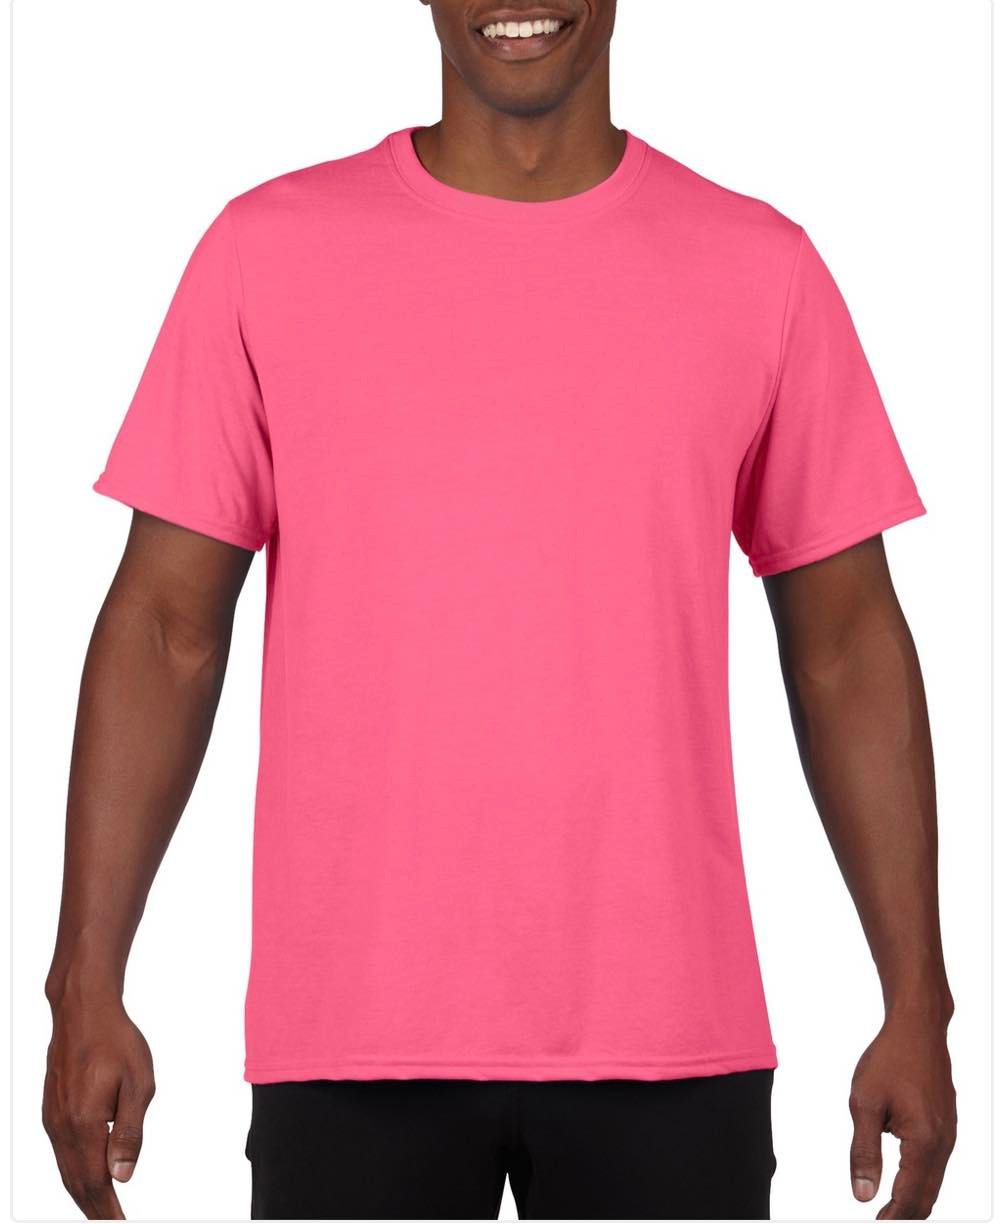 SPRING COLORS(GILDAN 42000) 100% Polyester Sublimation Ready T-shirts  COLORS (SEASONAL)